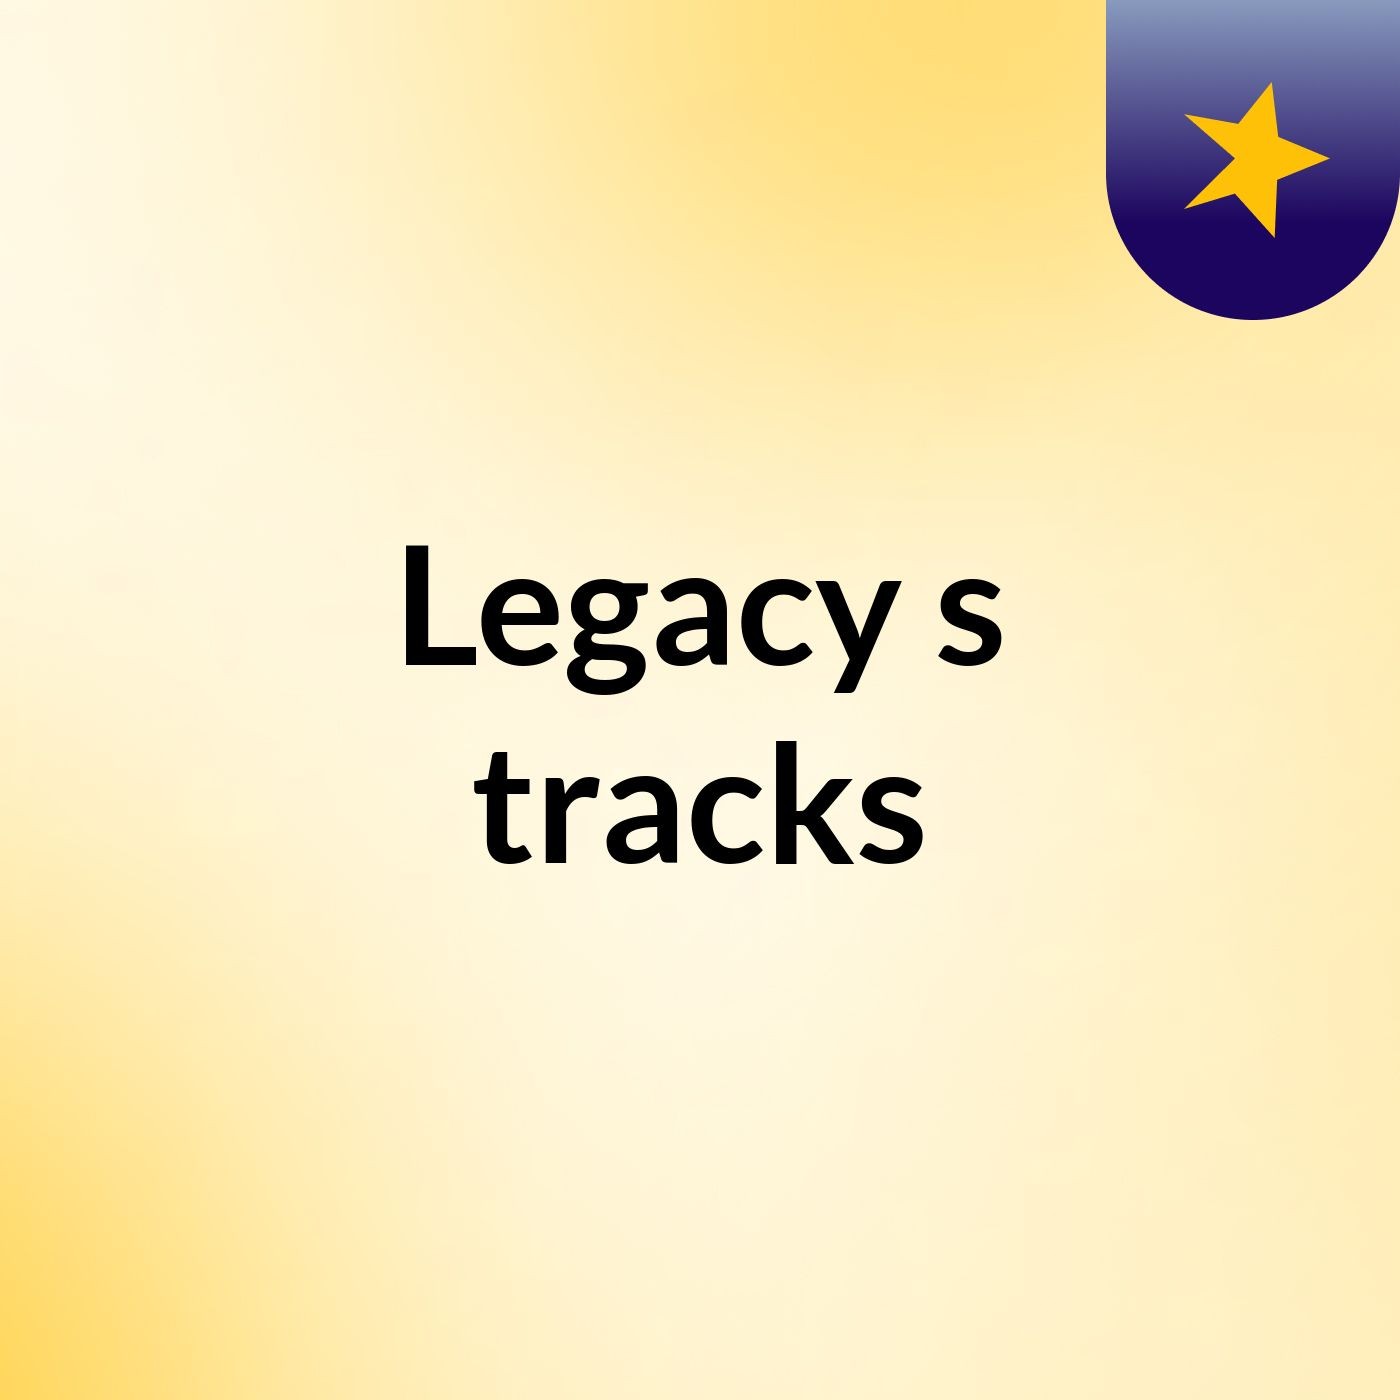 Legacy's tracks